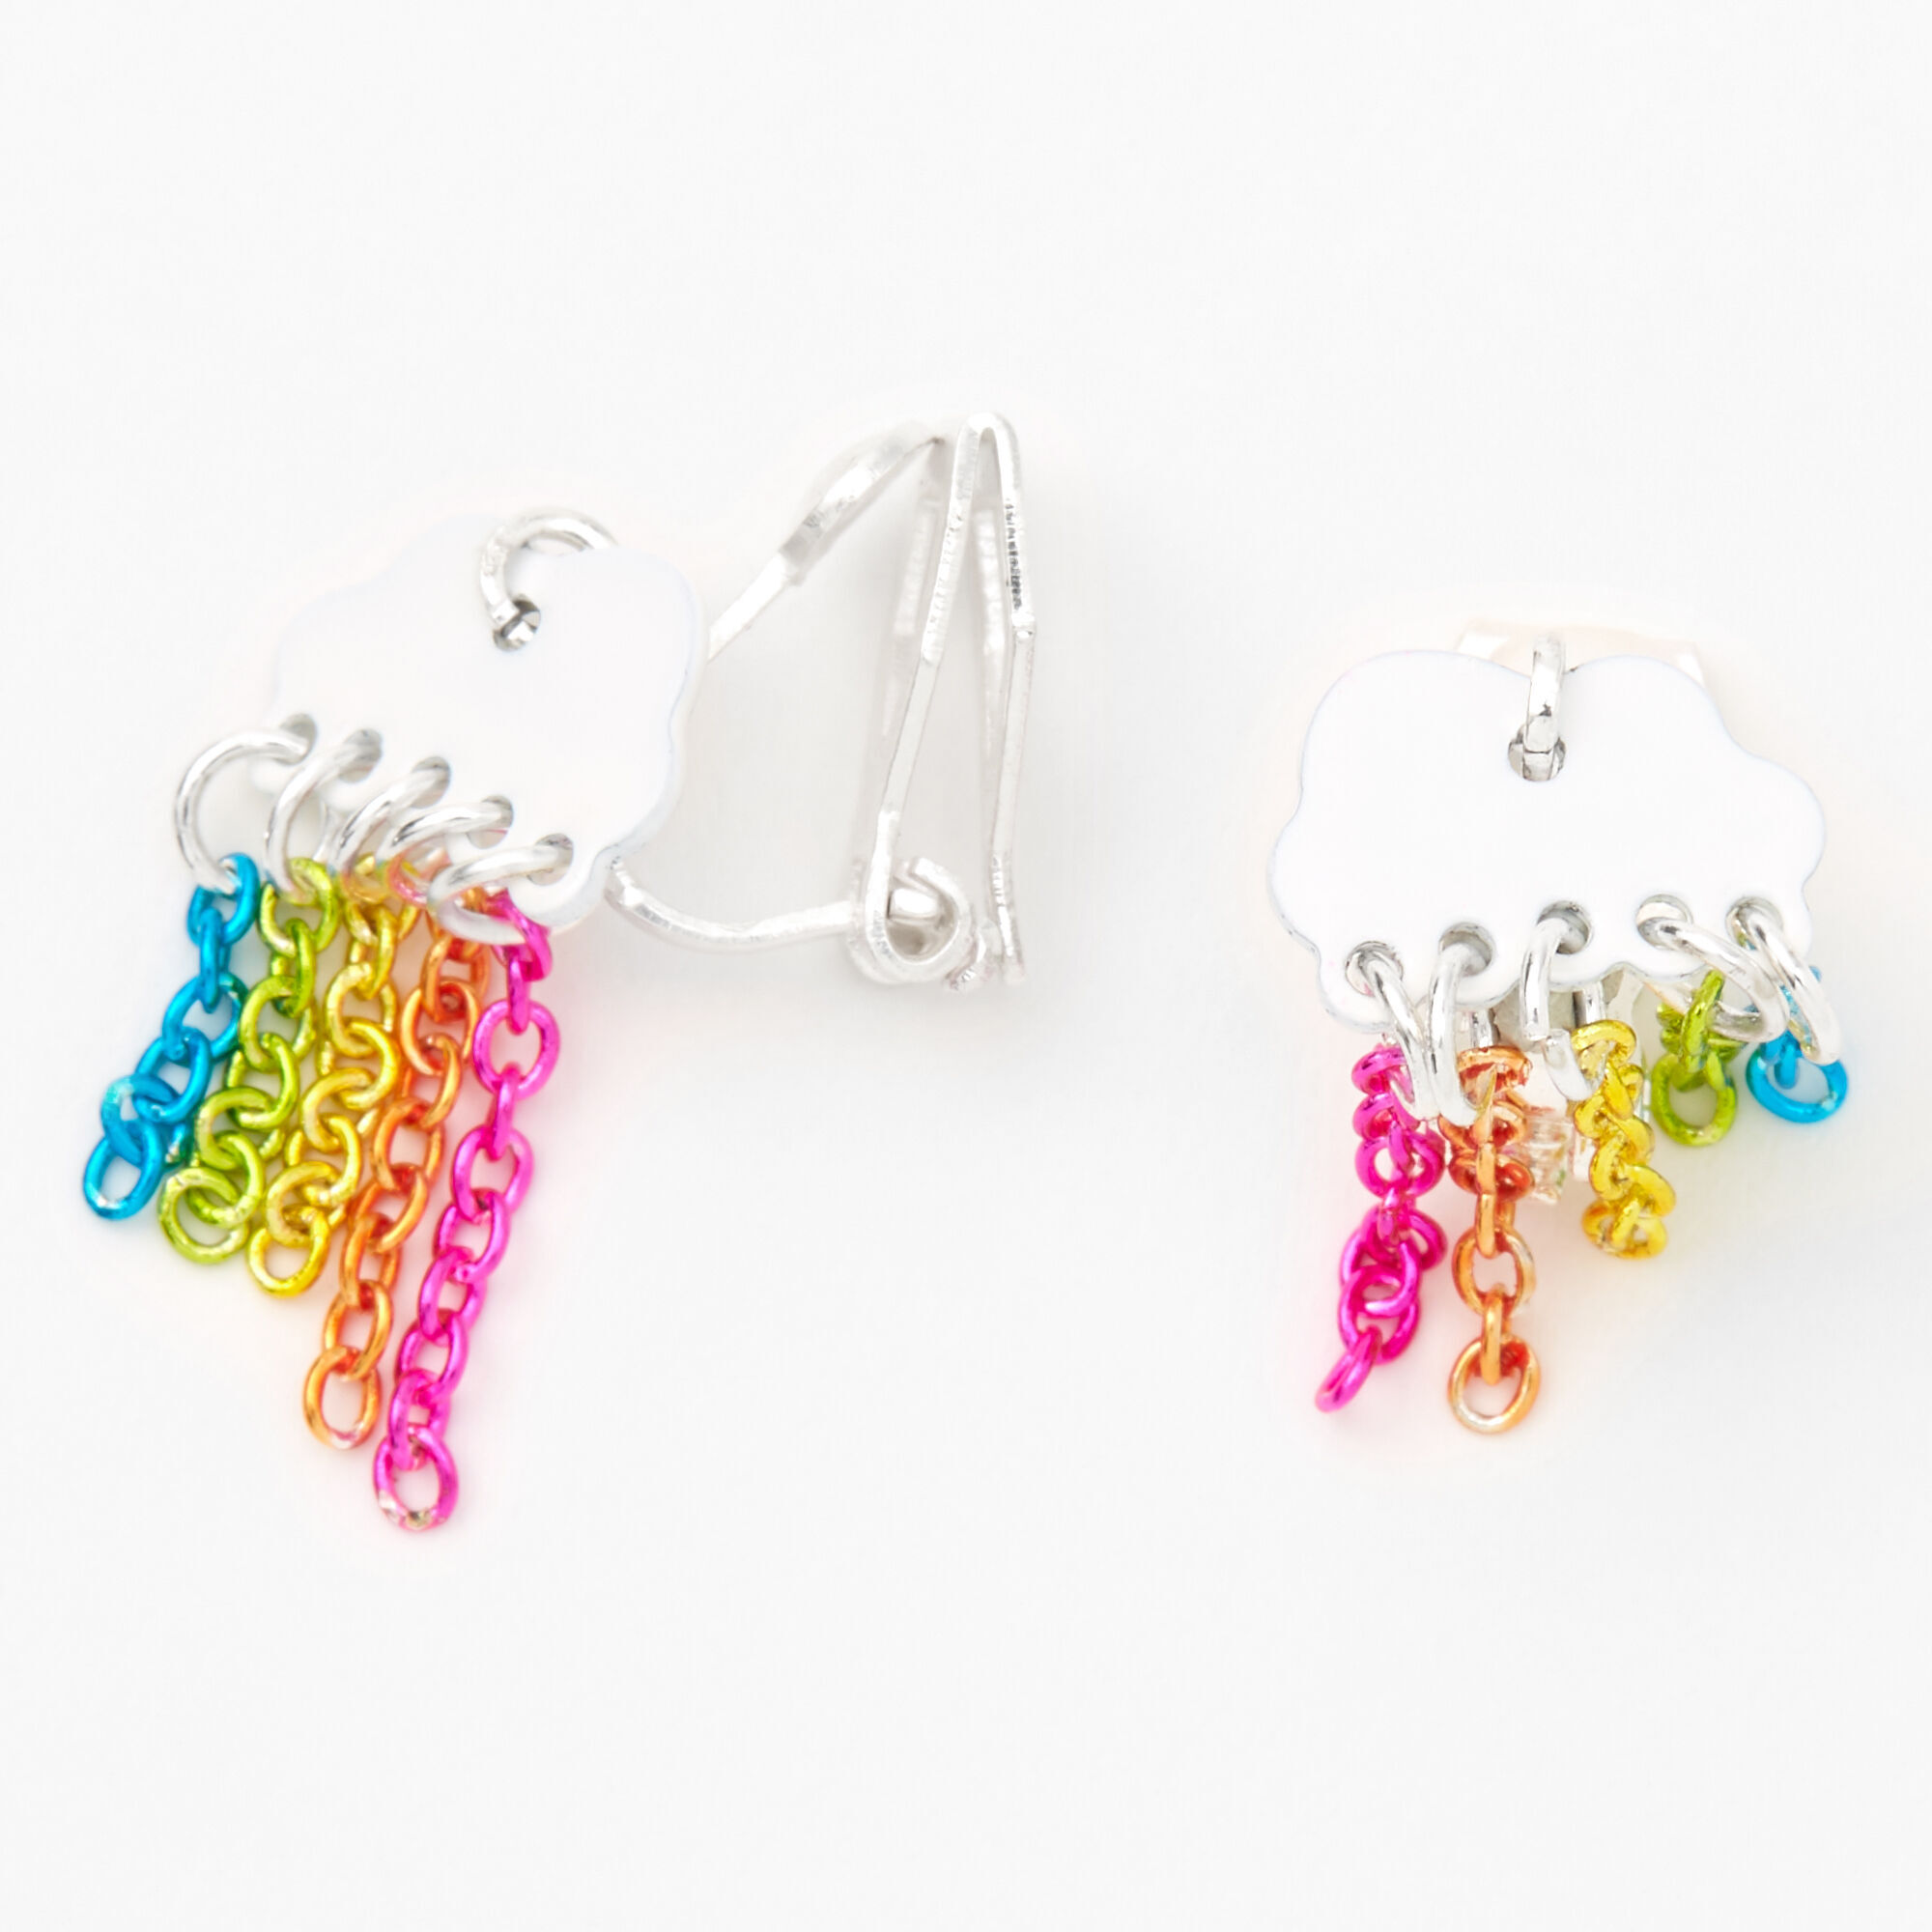 Clip on Earrings, Non-Slip Silicone Clips Cloud Luvs Rainbow